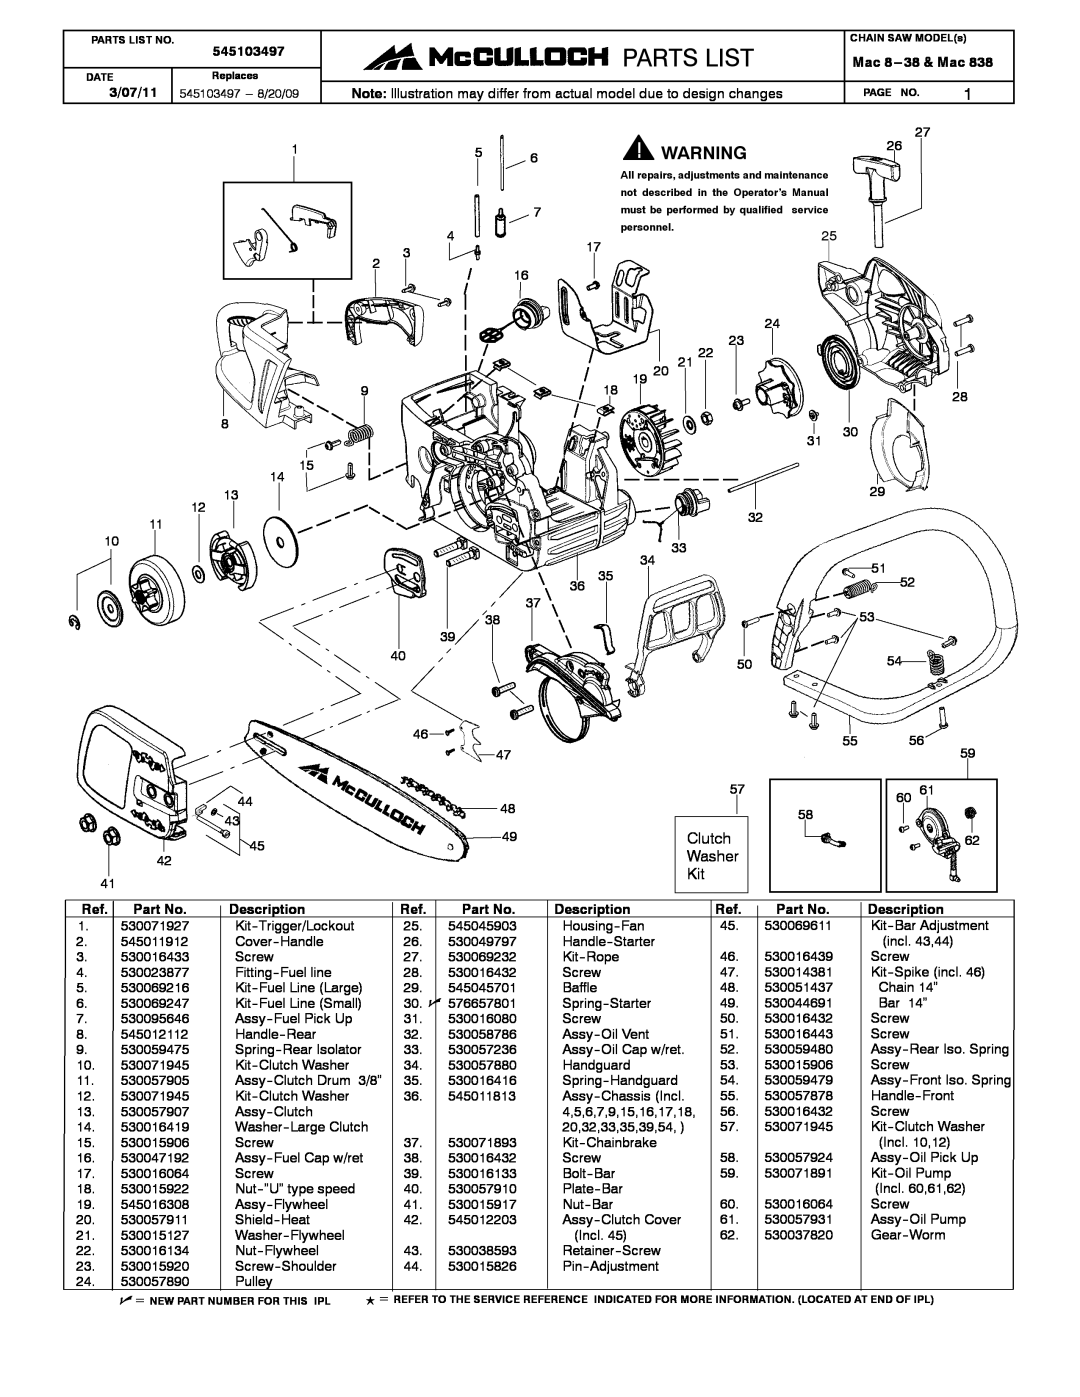 McCulloch 545103497 manual Parts List, Clutch, Washer, Mac 8---38 & Mac, Description 